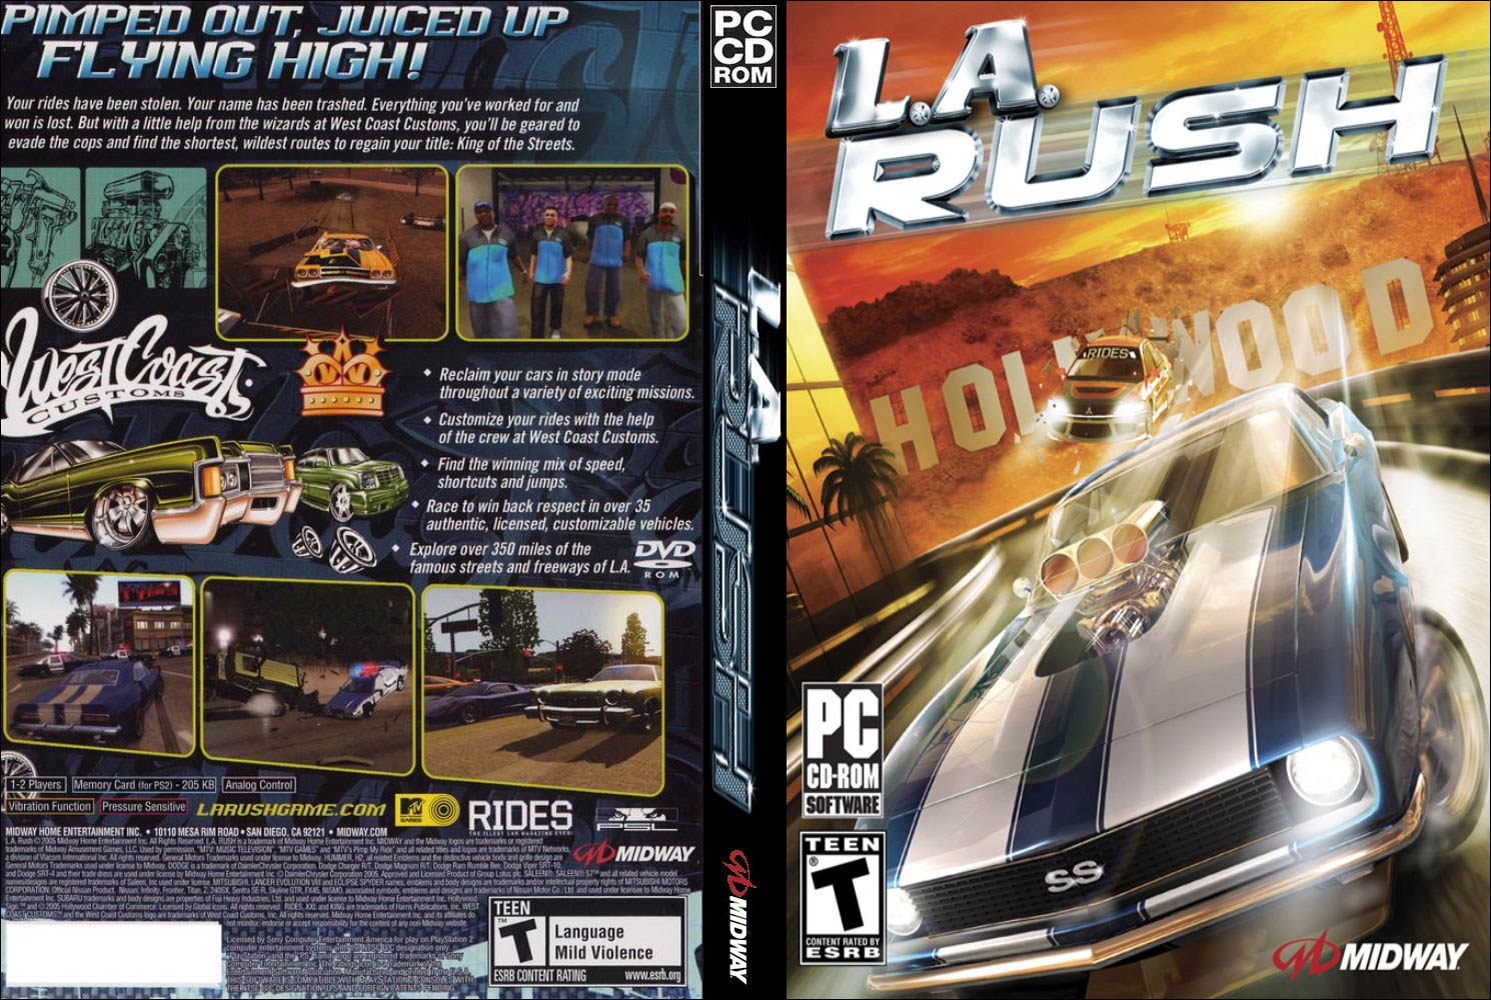 L.A. Rush - DVD obal